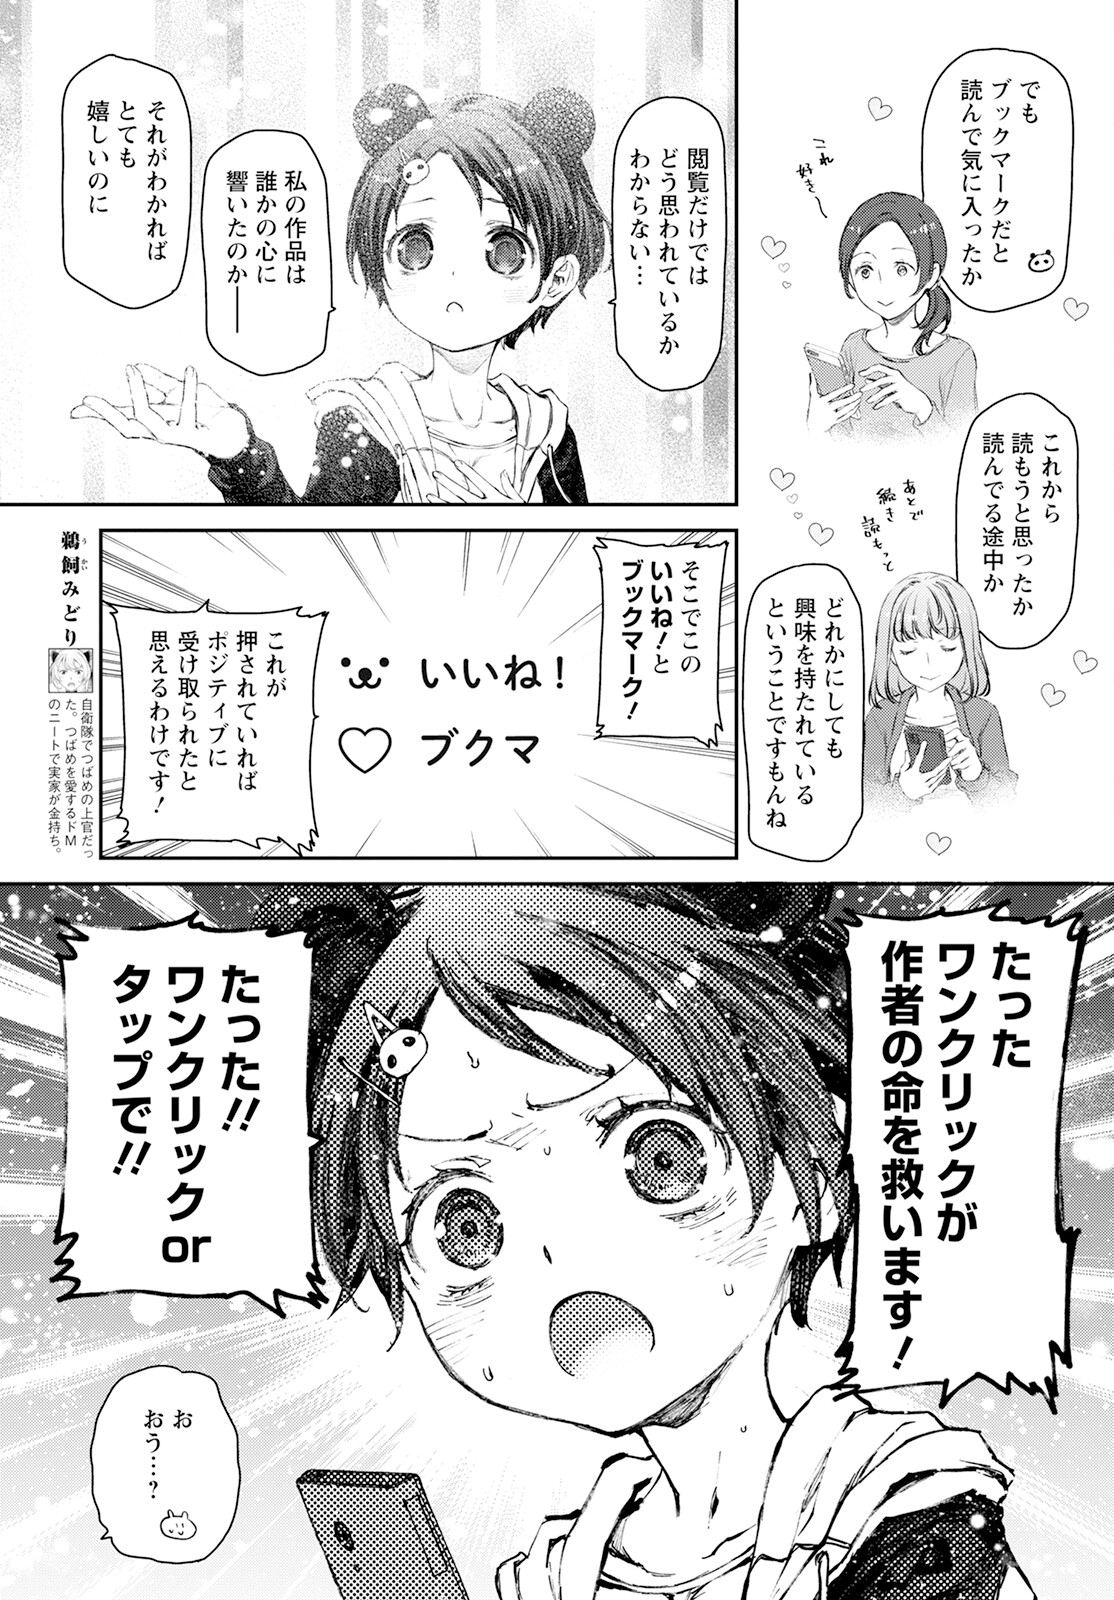 Uchi no Maid ga Uzasugiru! - Chapter 56 - Page 3